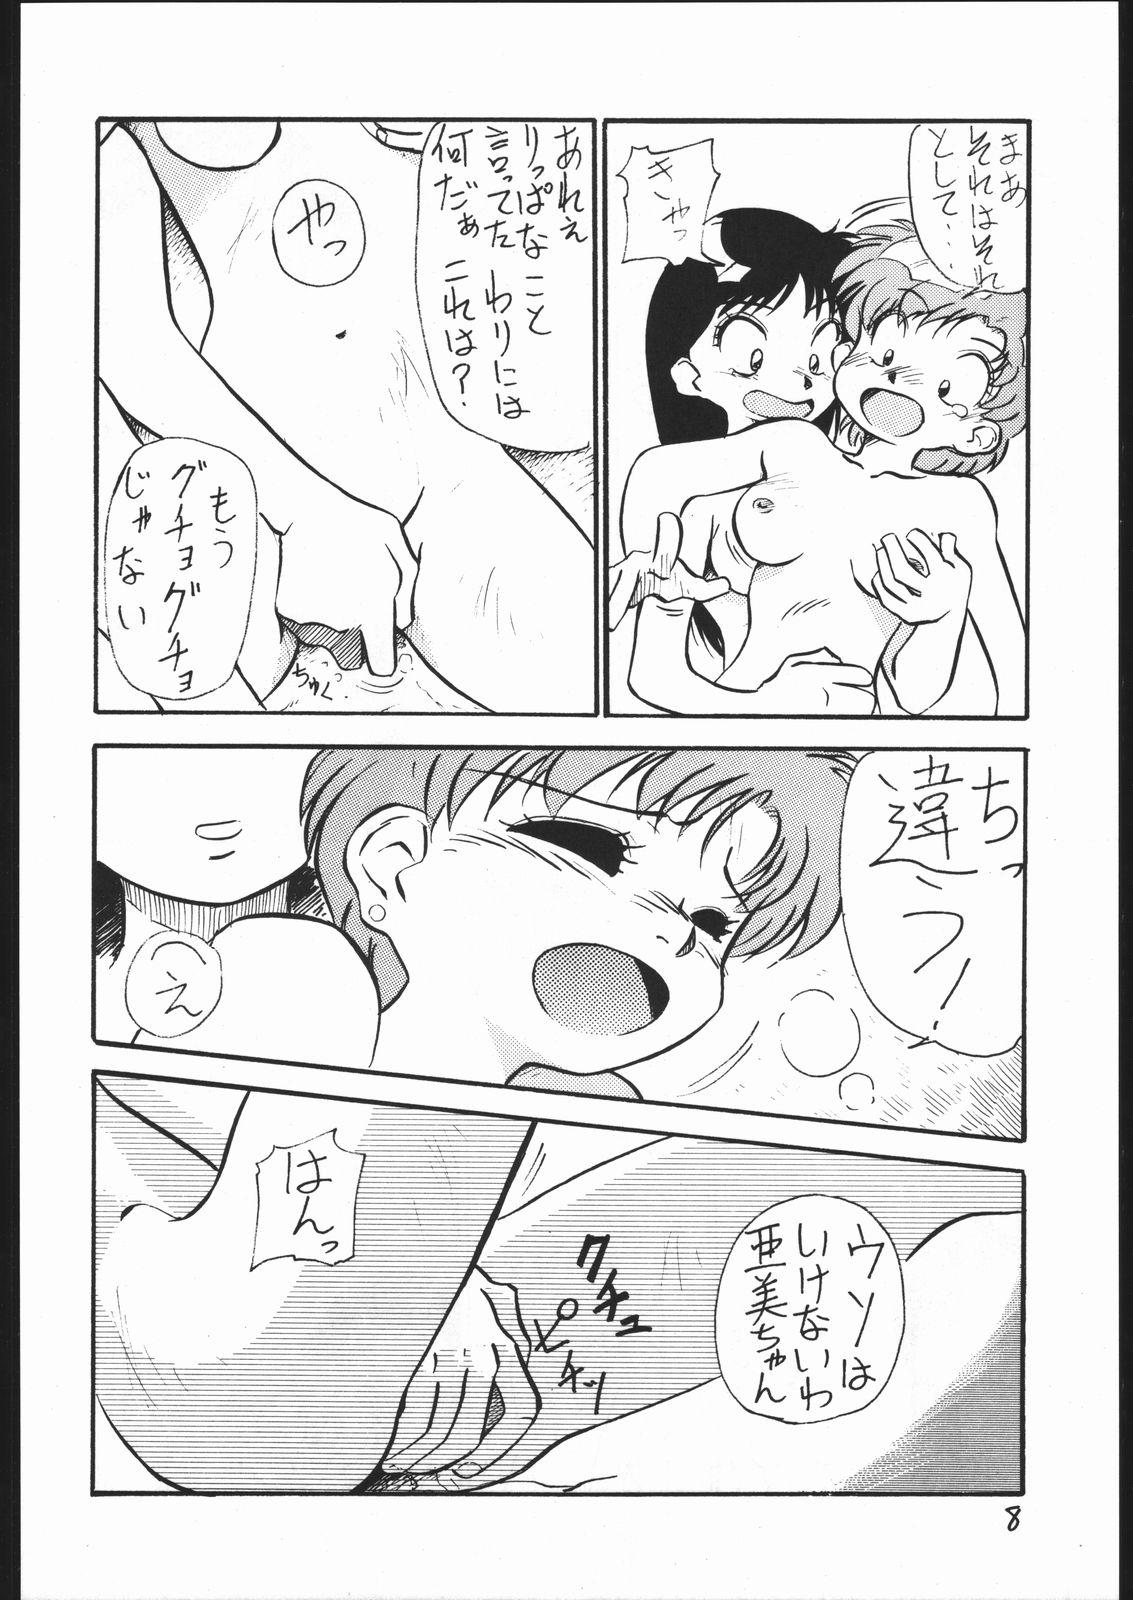 Creampies V・H・S・M Vol. 1 - Sailor moon 8teenxxx - Page 7